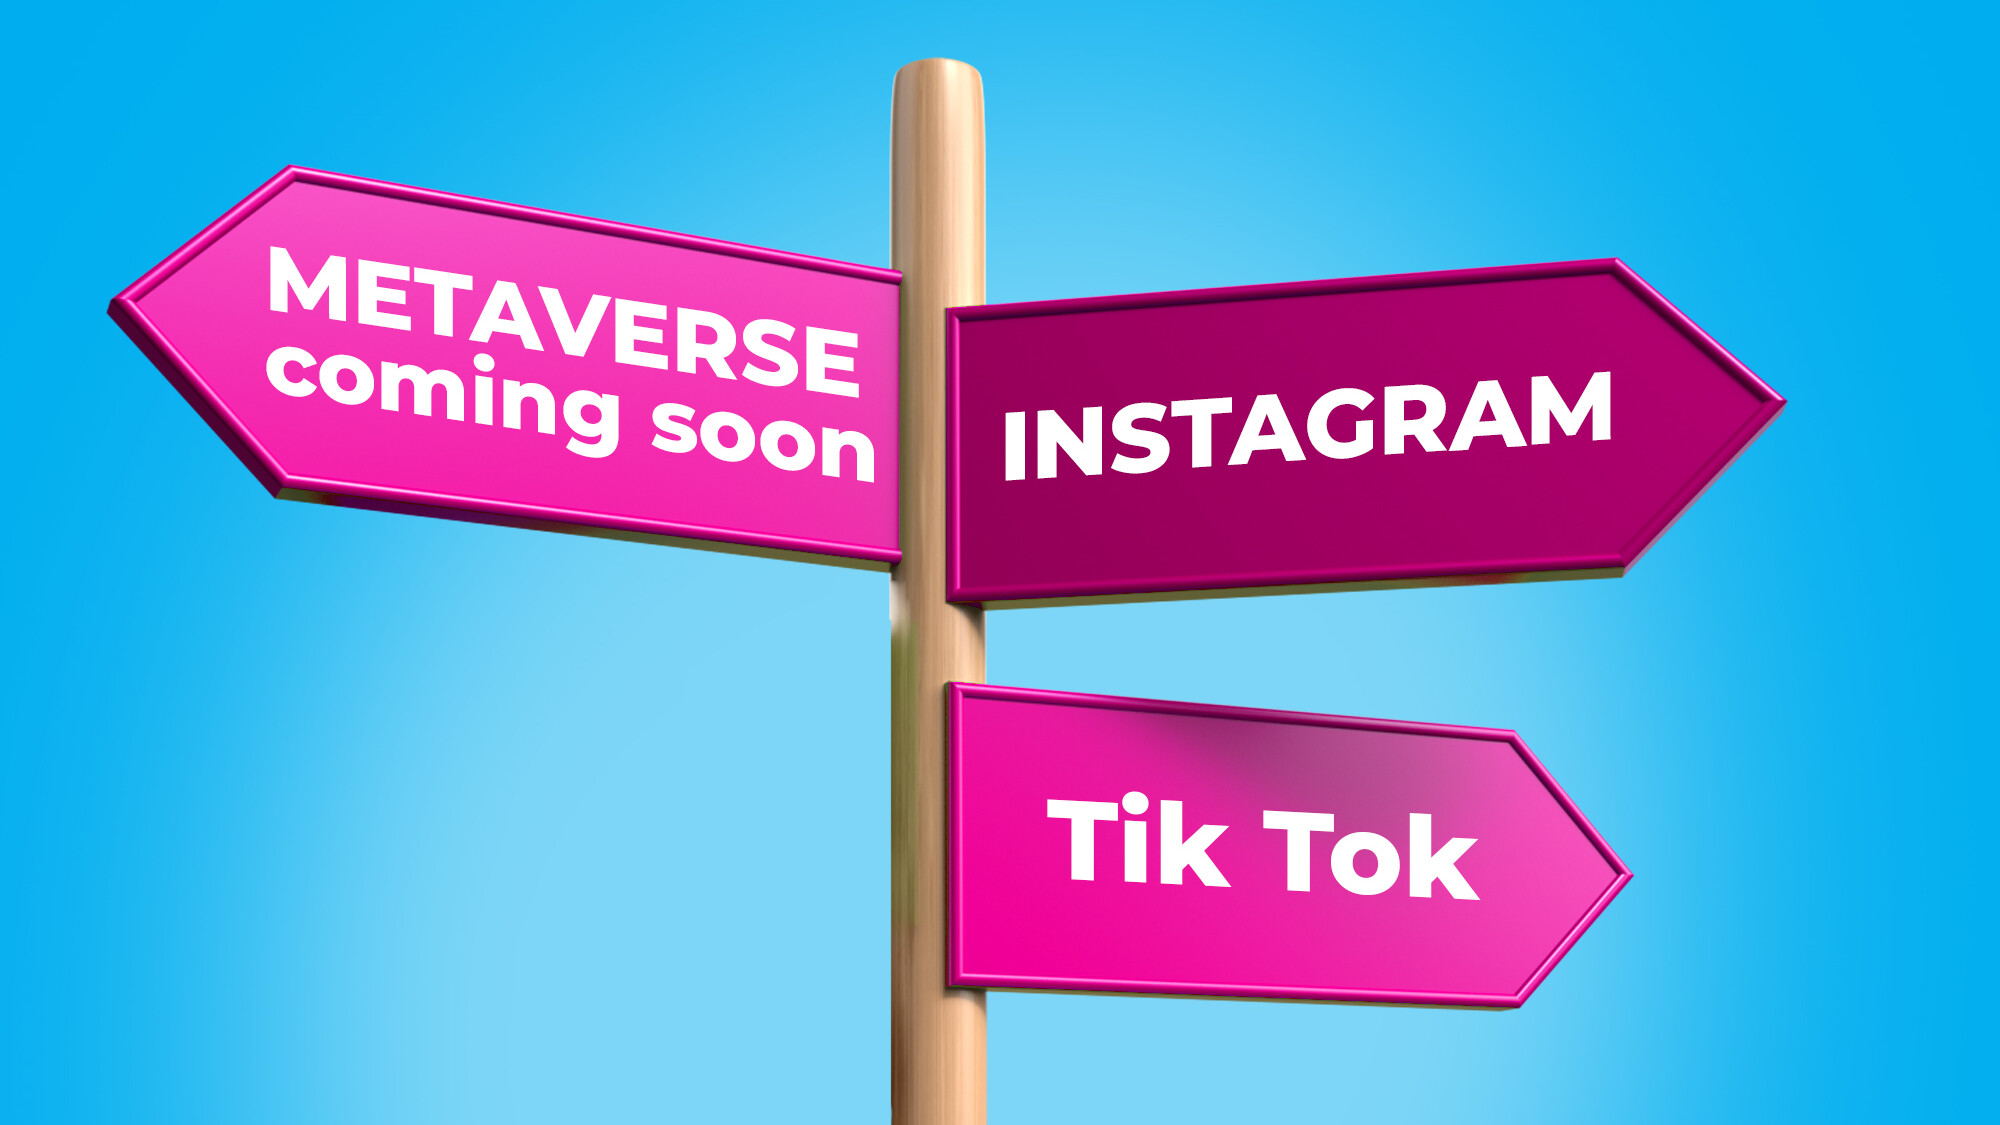 Signs pointing to Instagram, Metaverse and Tik Tok